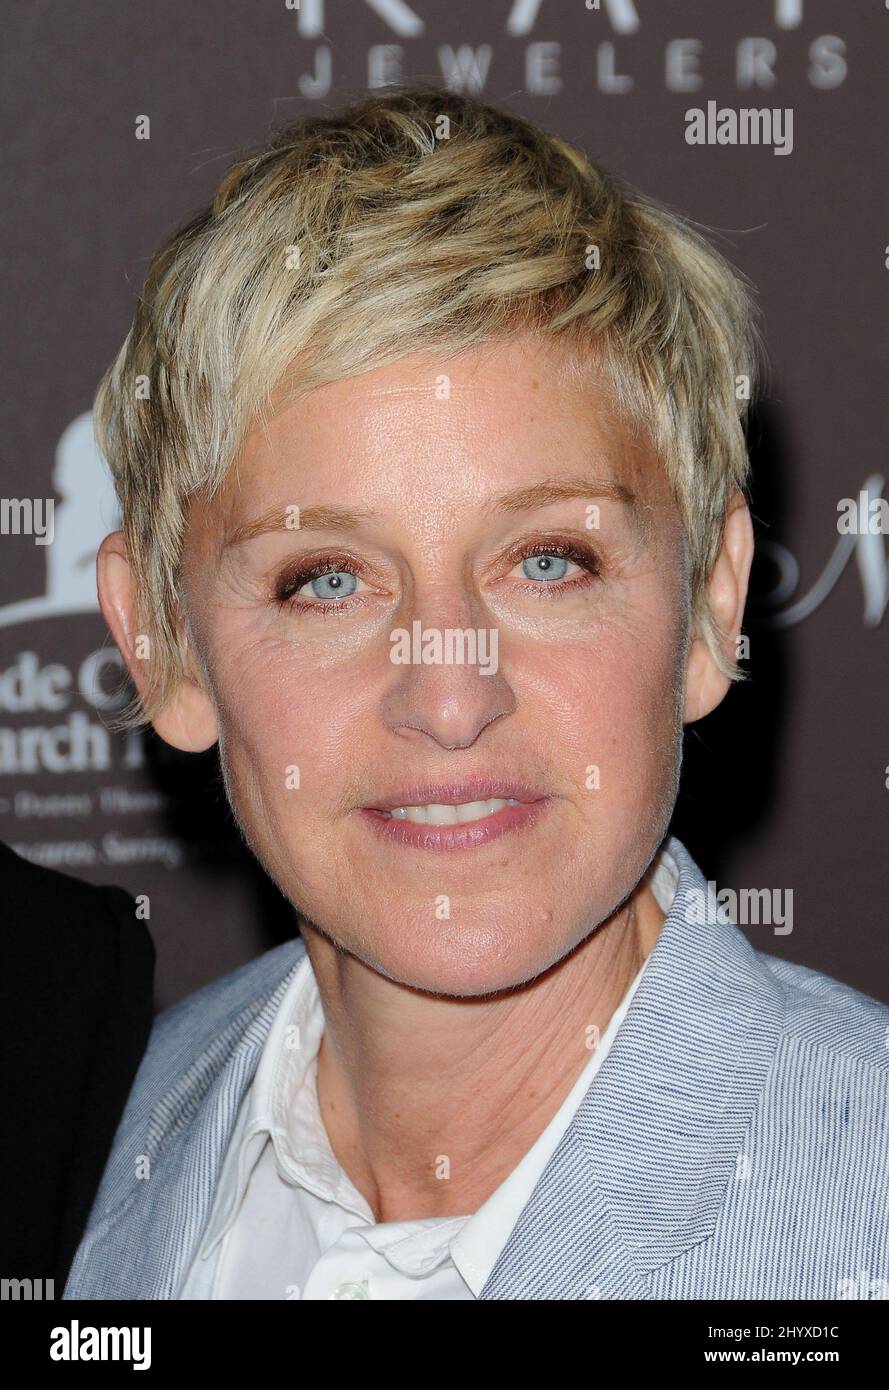 Ellen DeGeneres at jewelry designer Neil Lane's debut of his new Bridal ...